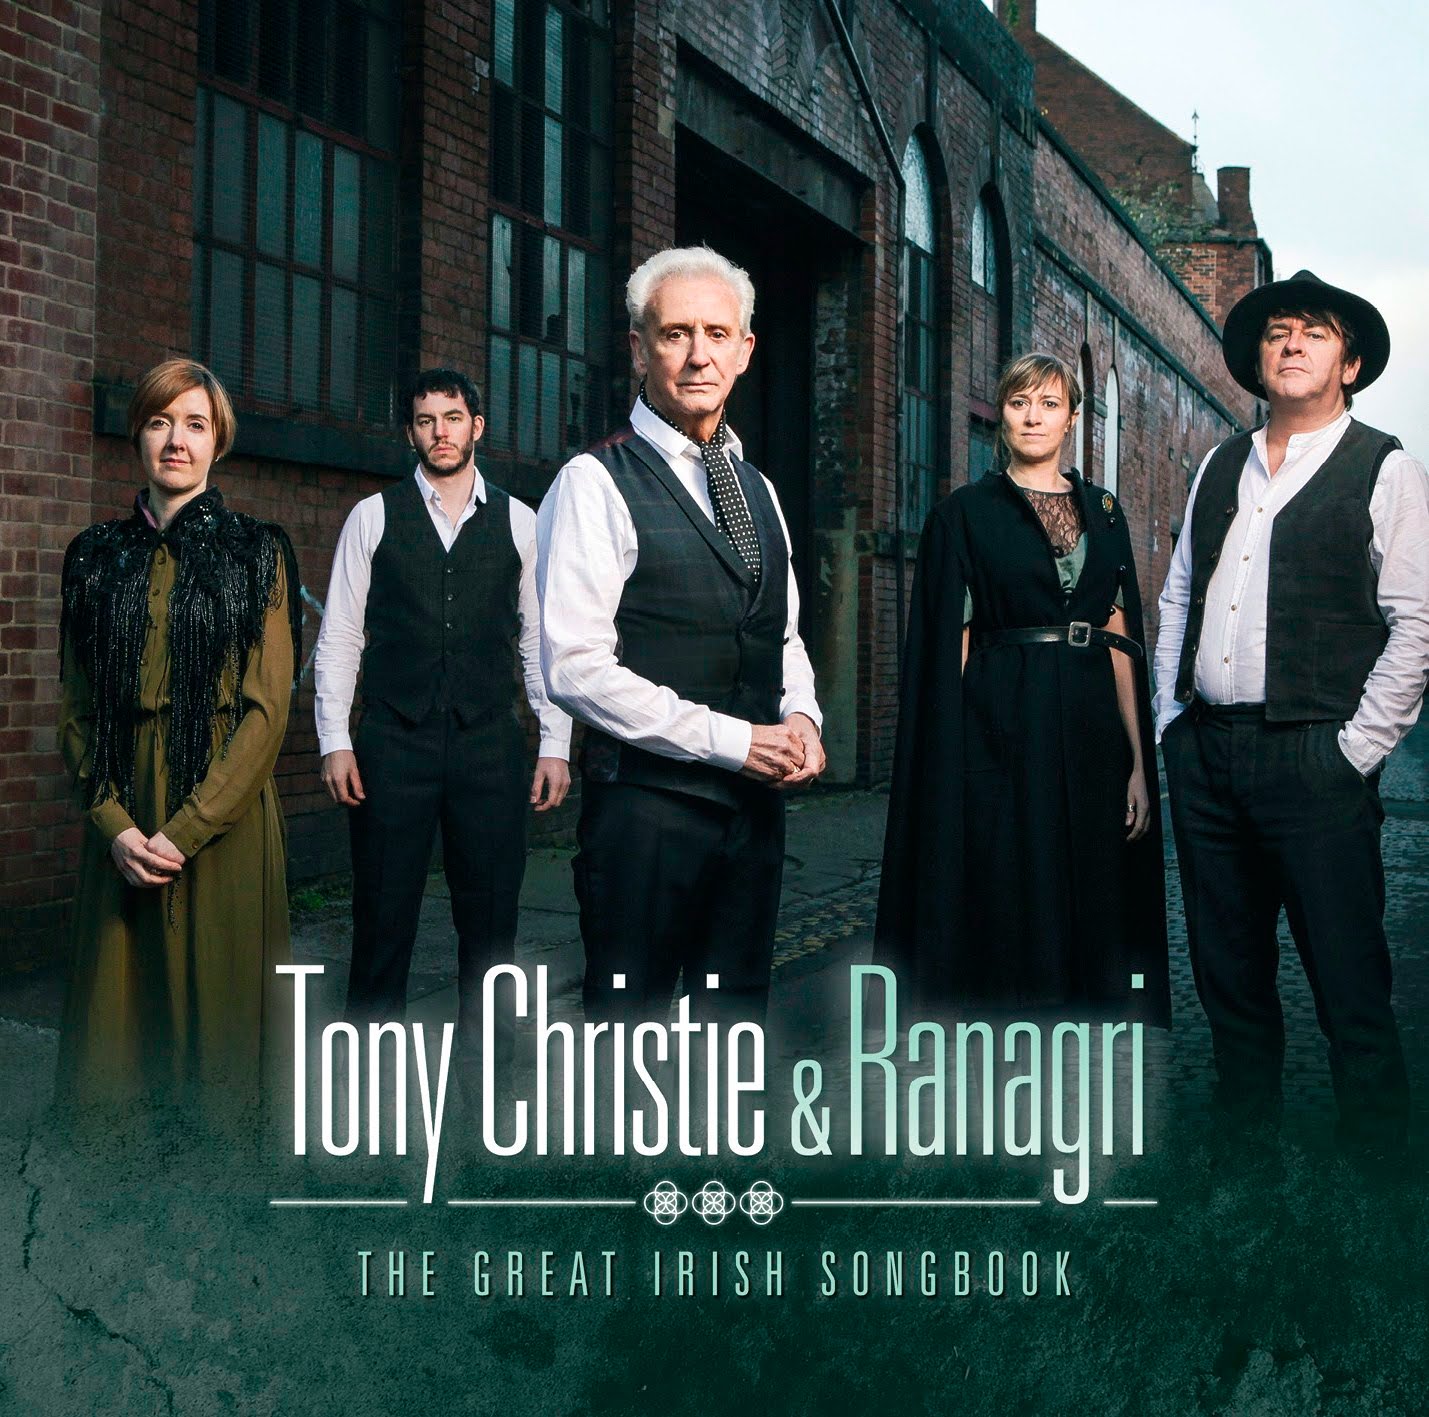 Tony Christie & Ranagri - The Great Irish Songbook (2015) SACD ISO + FLAC 24bit/44,1kHz